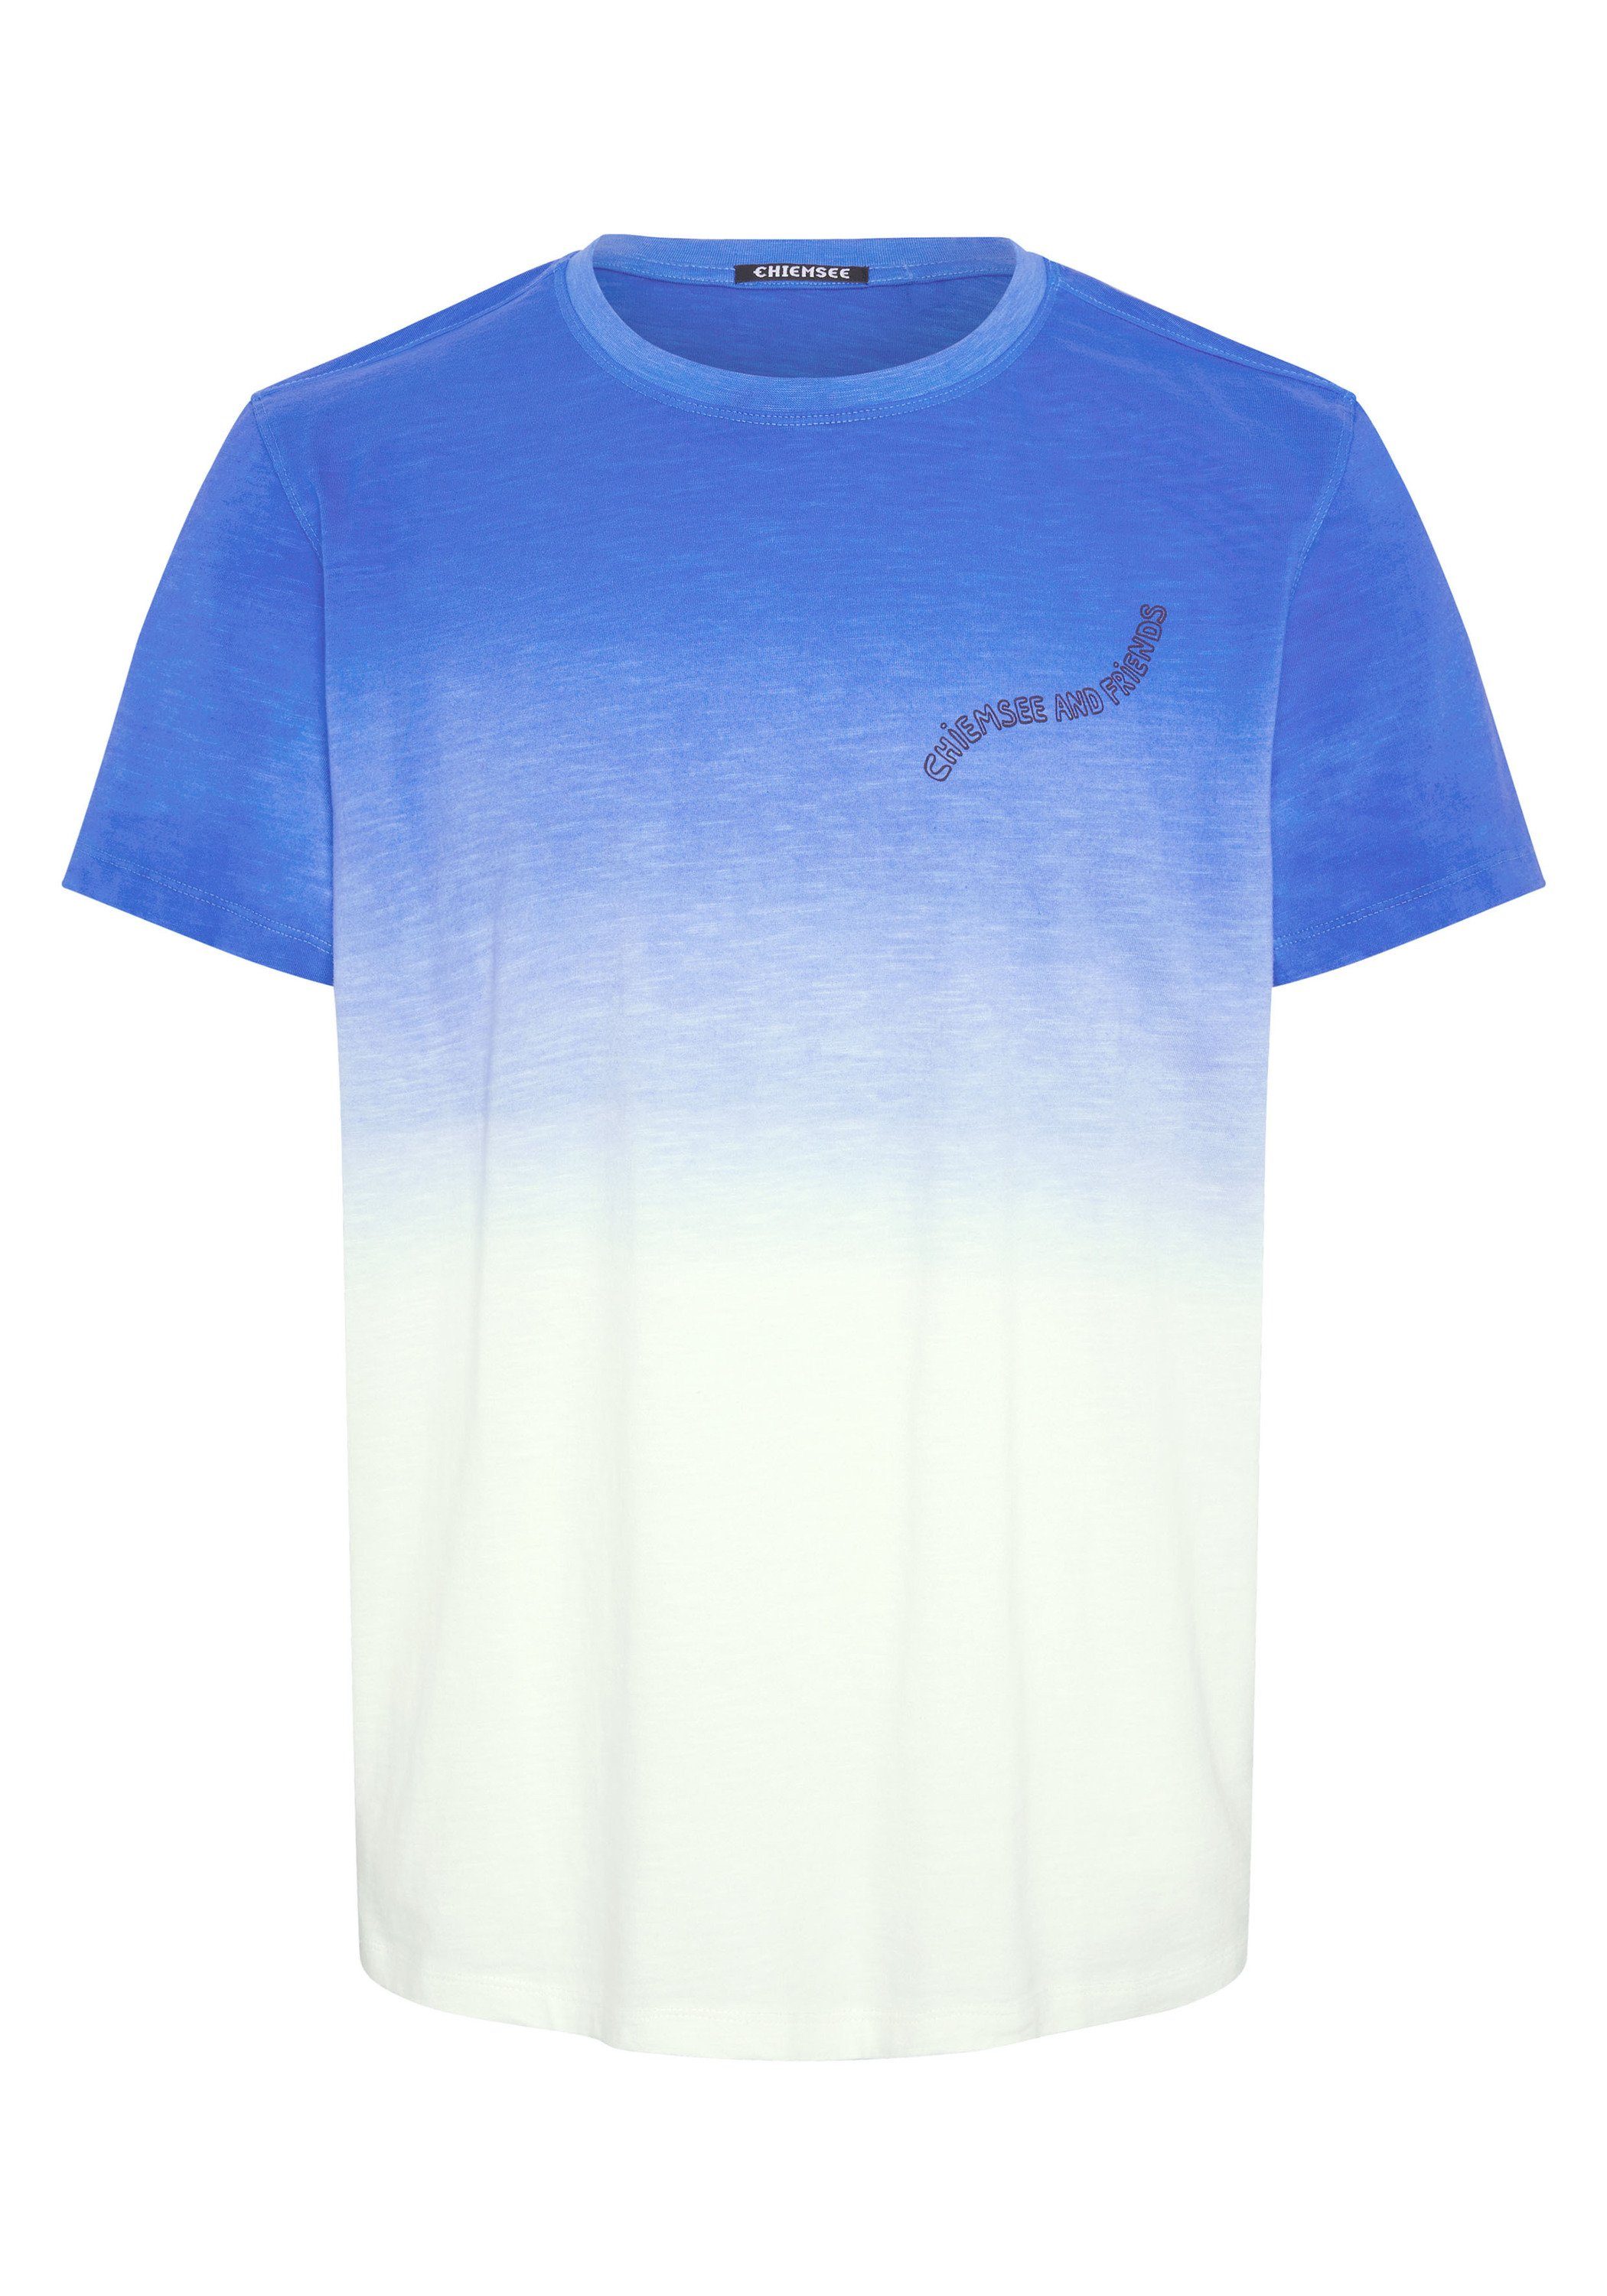 mit Chiemsee 1 4548 Blue im Blue/Dark Print-Shirt Farbverlauf Slub-Yarn-Textur Medium T-Shirt